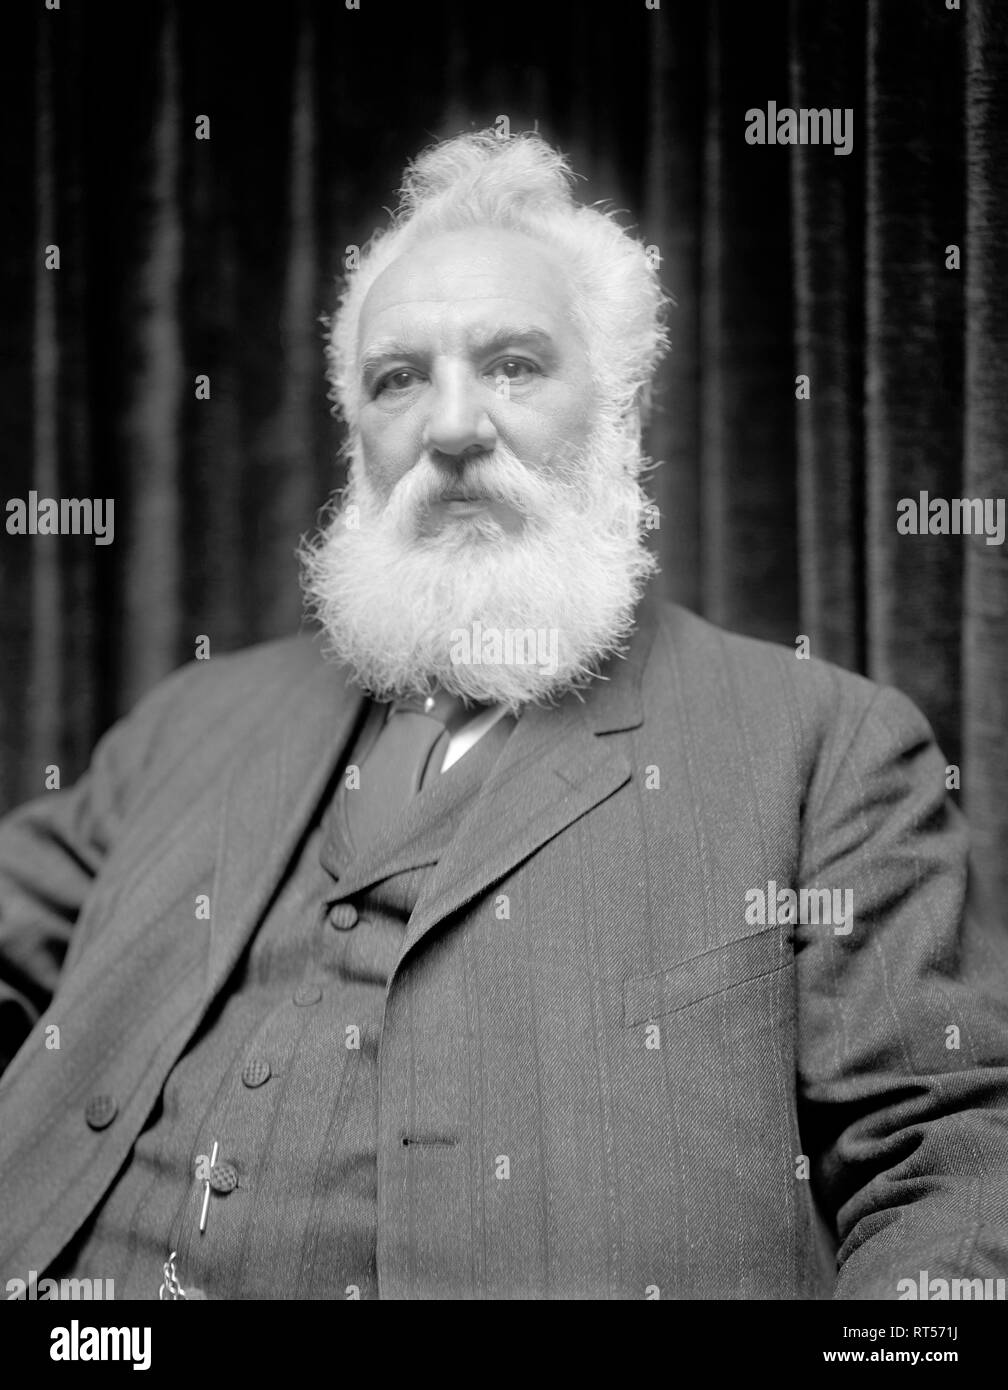 American history portrait of Alexander Graham Bell. Stock Photo